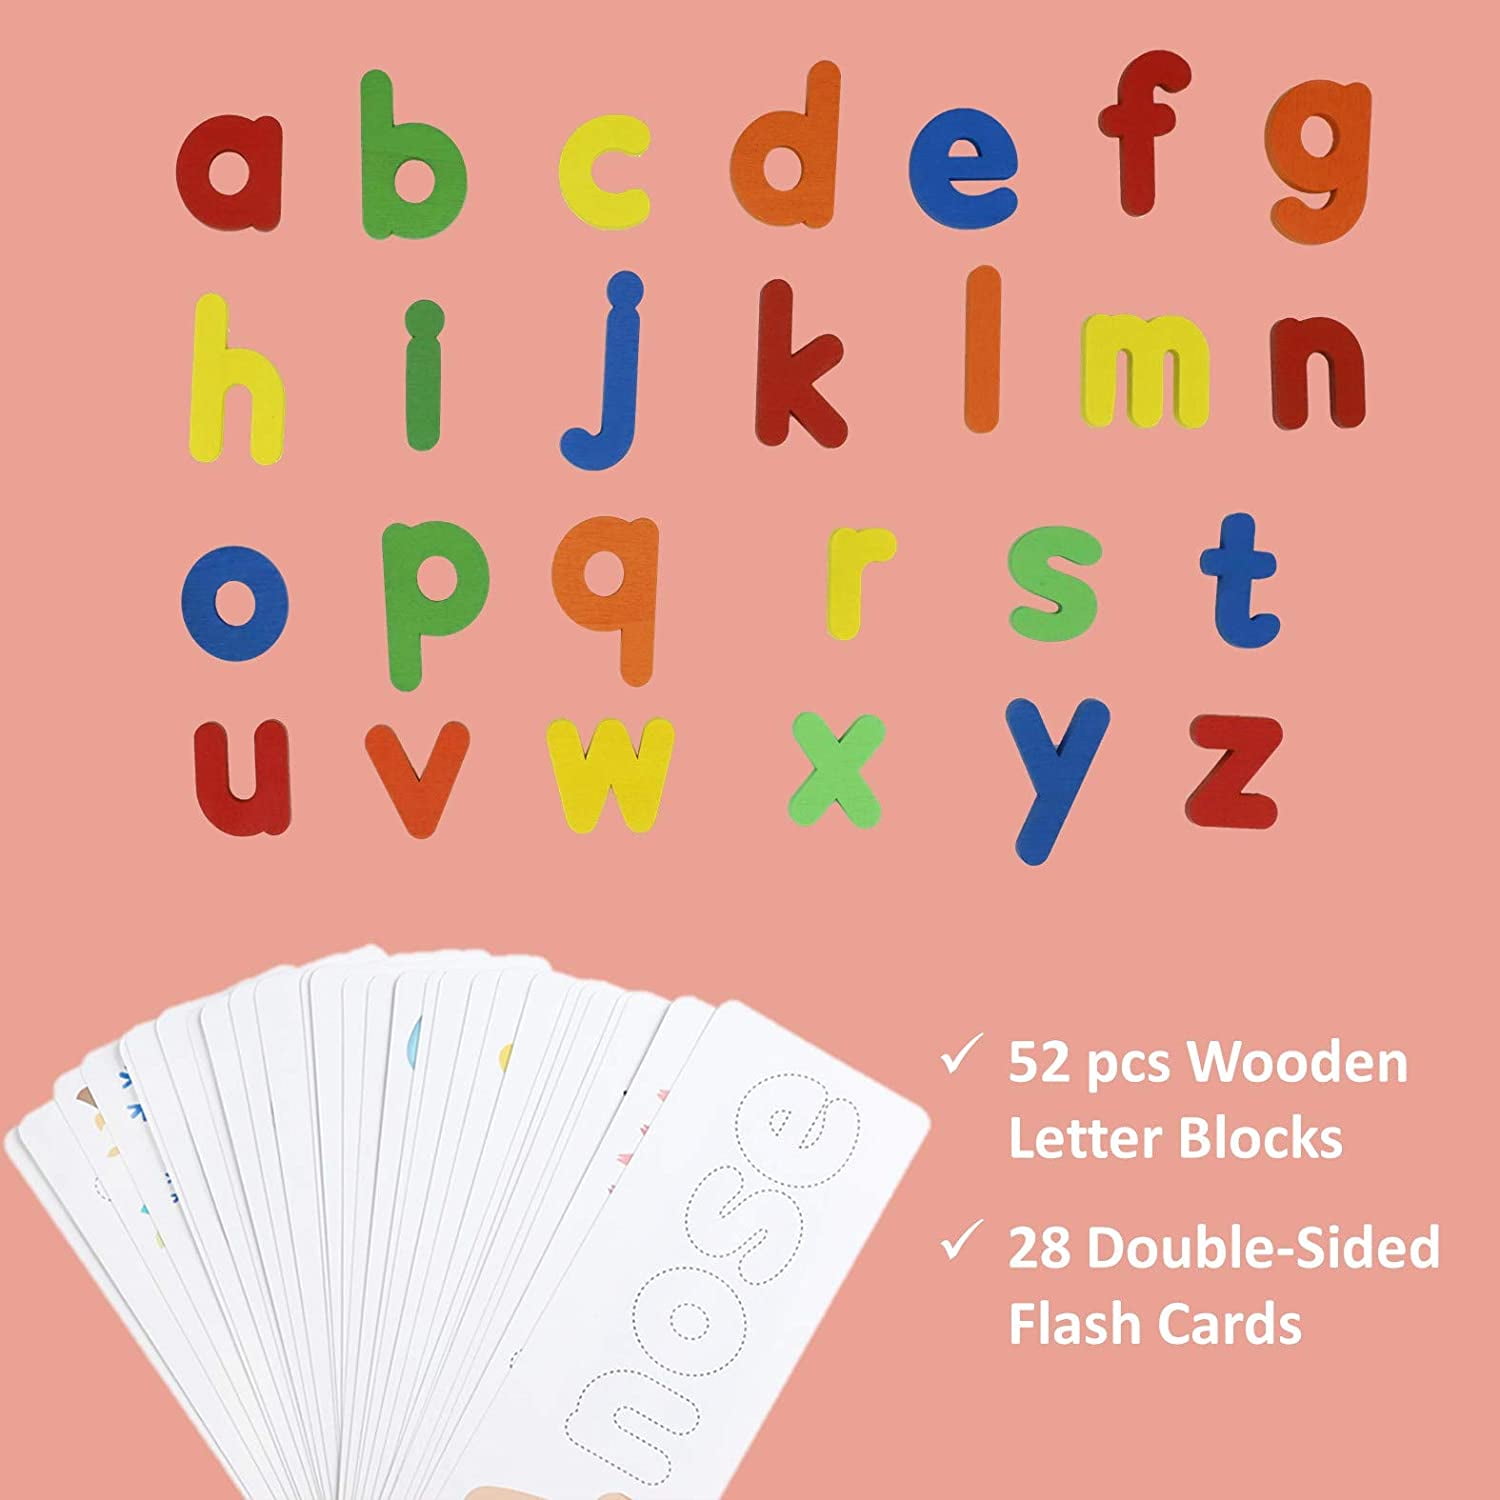 Details about   Digital Letter Geometry Shape Wooden Jigsaw Block Puzzle Kids Education Toys 